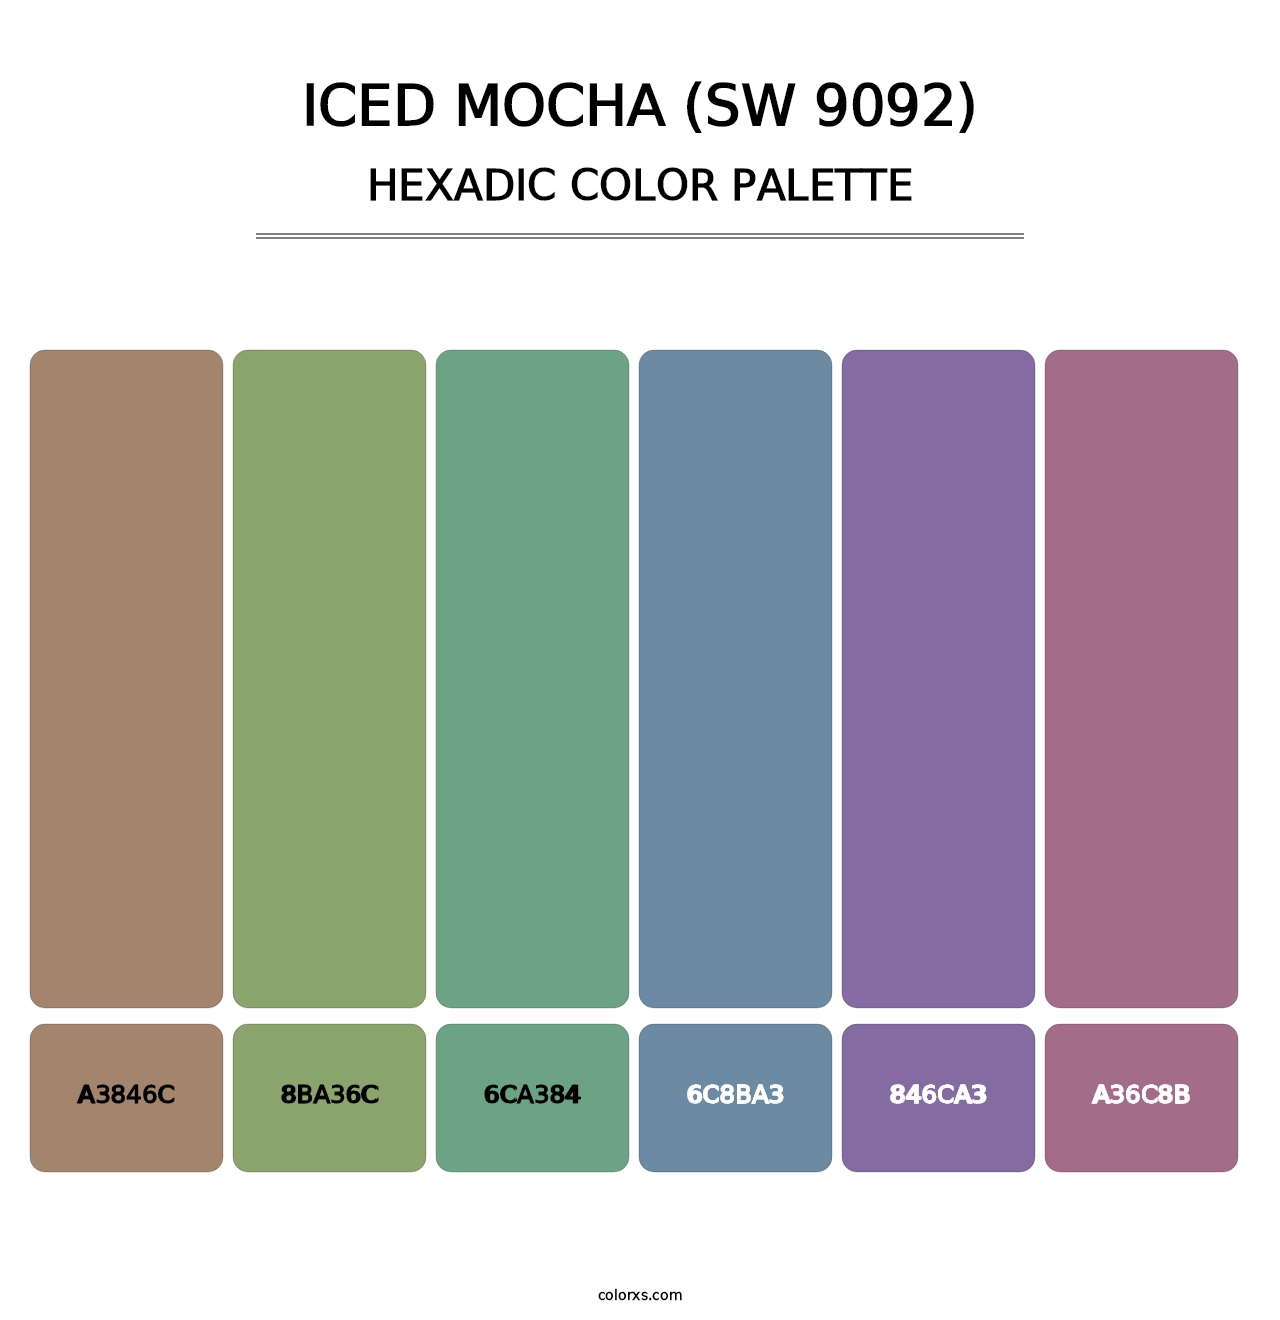 Iced Mocha (SW 9092) - Hexadic Color Palette